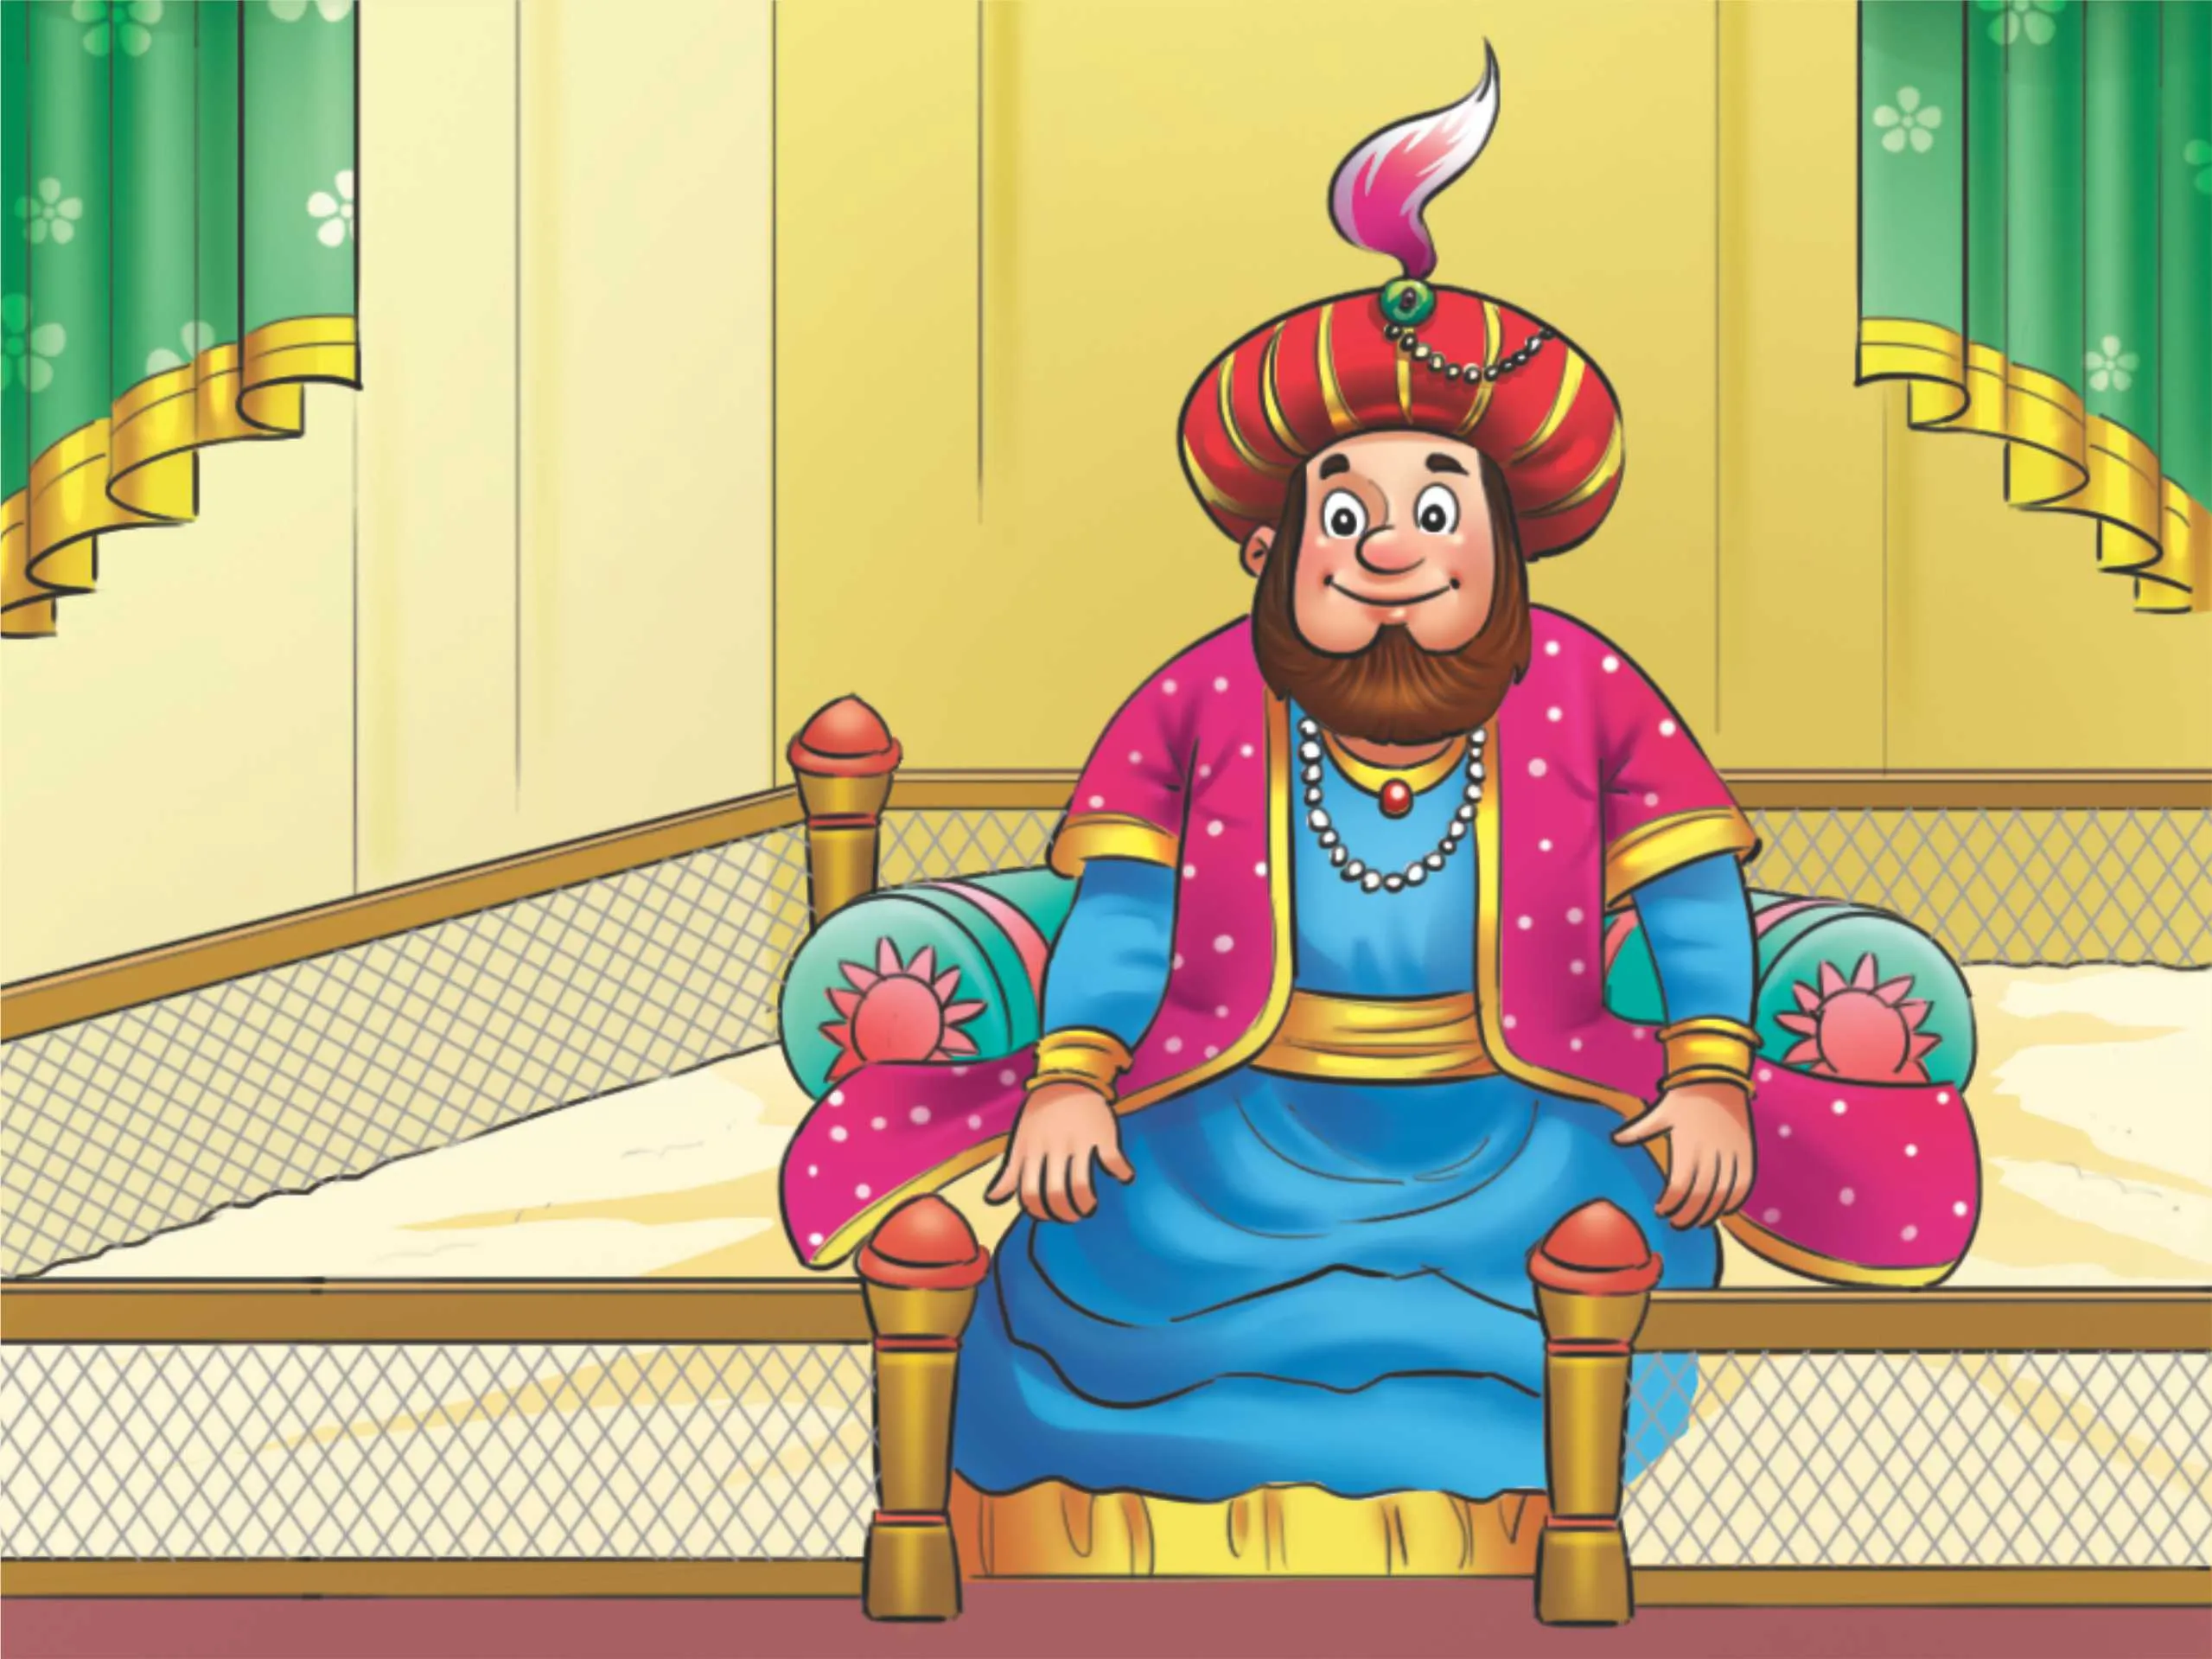 Cartoon image of a King